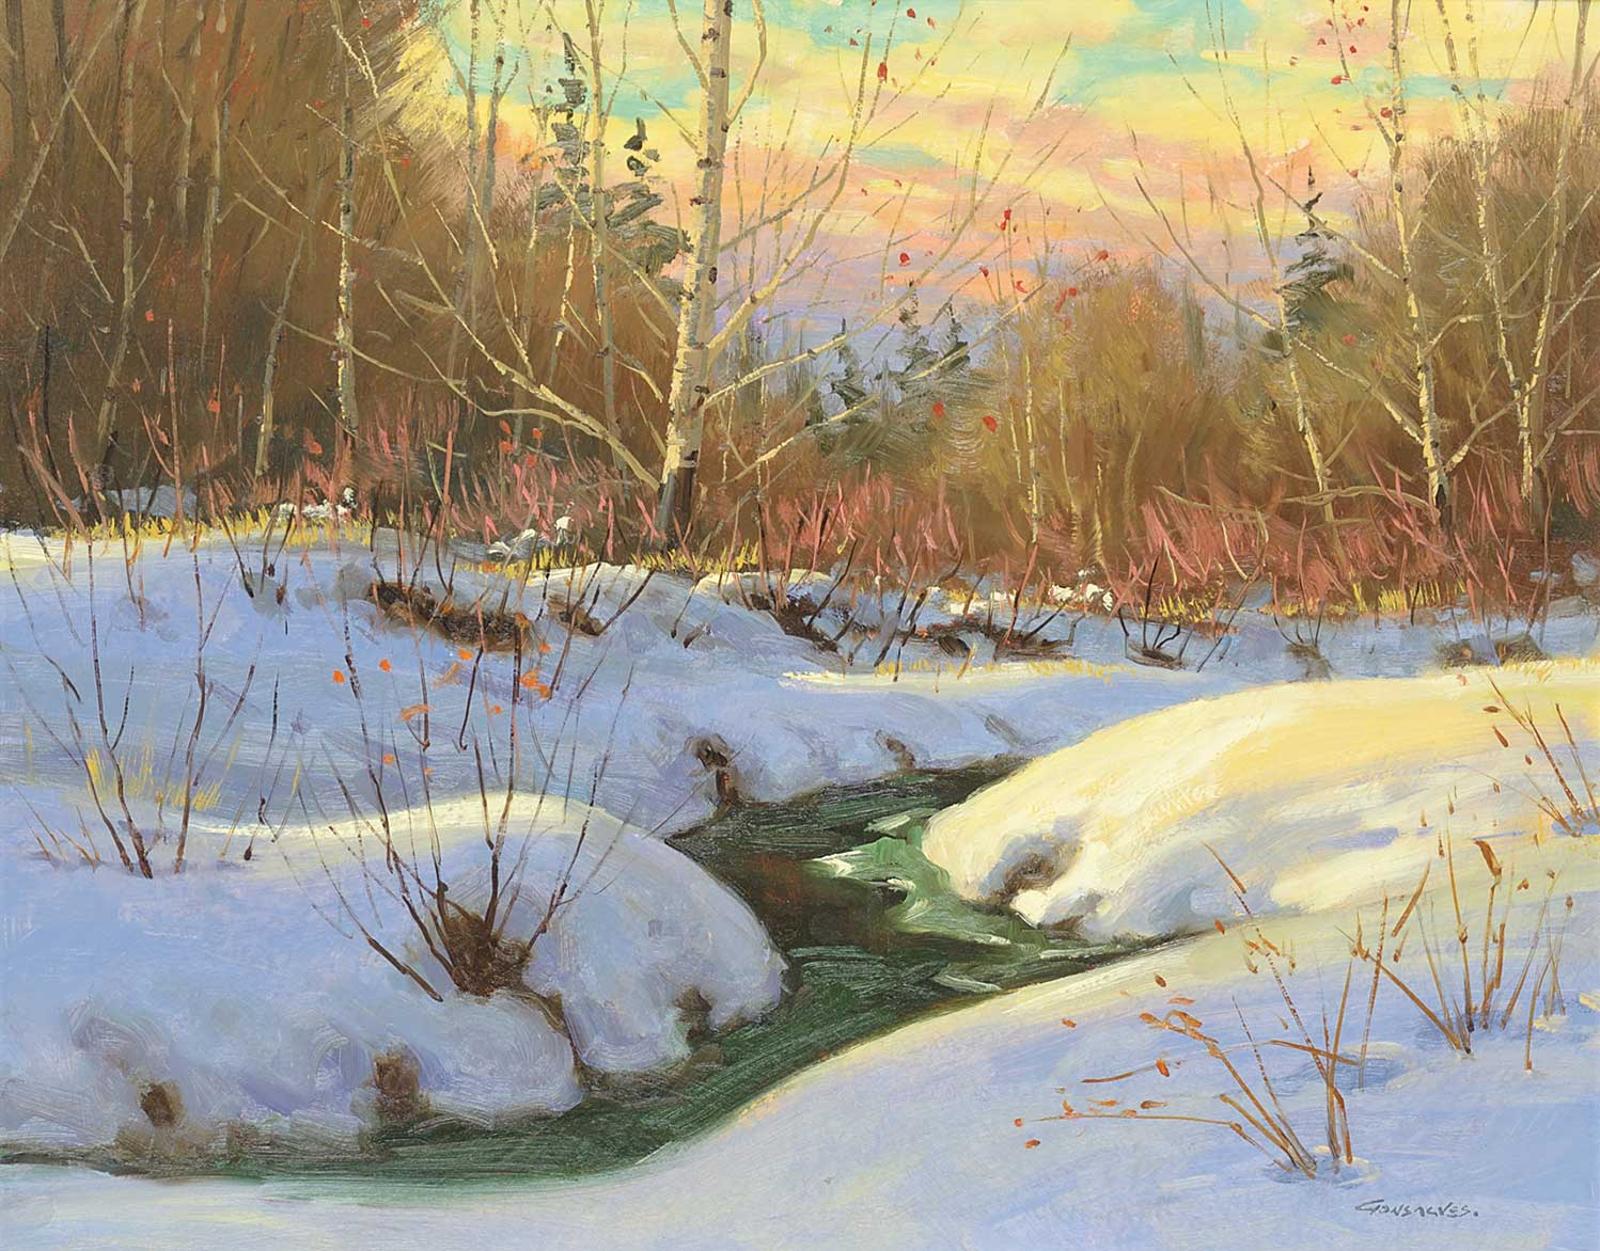 Mannie Gonsalves (1926-2012) - Untitled - Sunset Winter Landscape